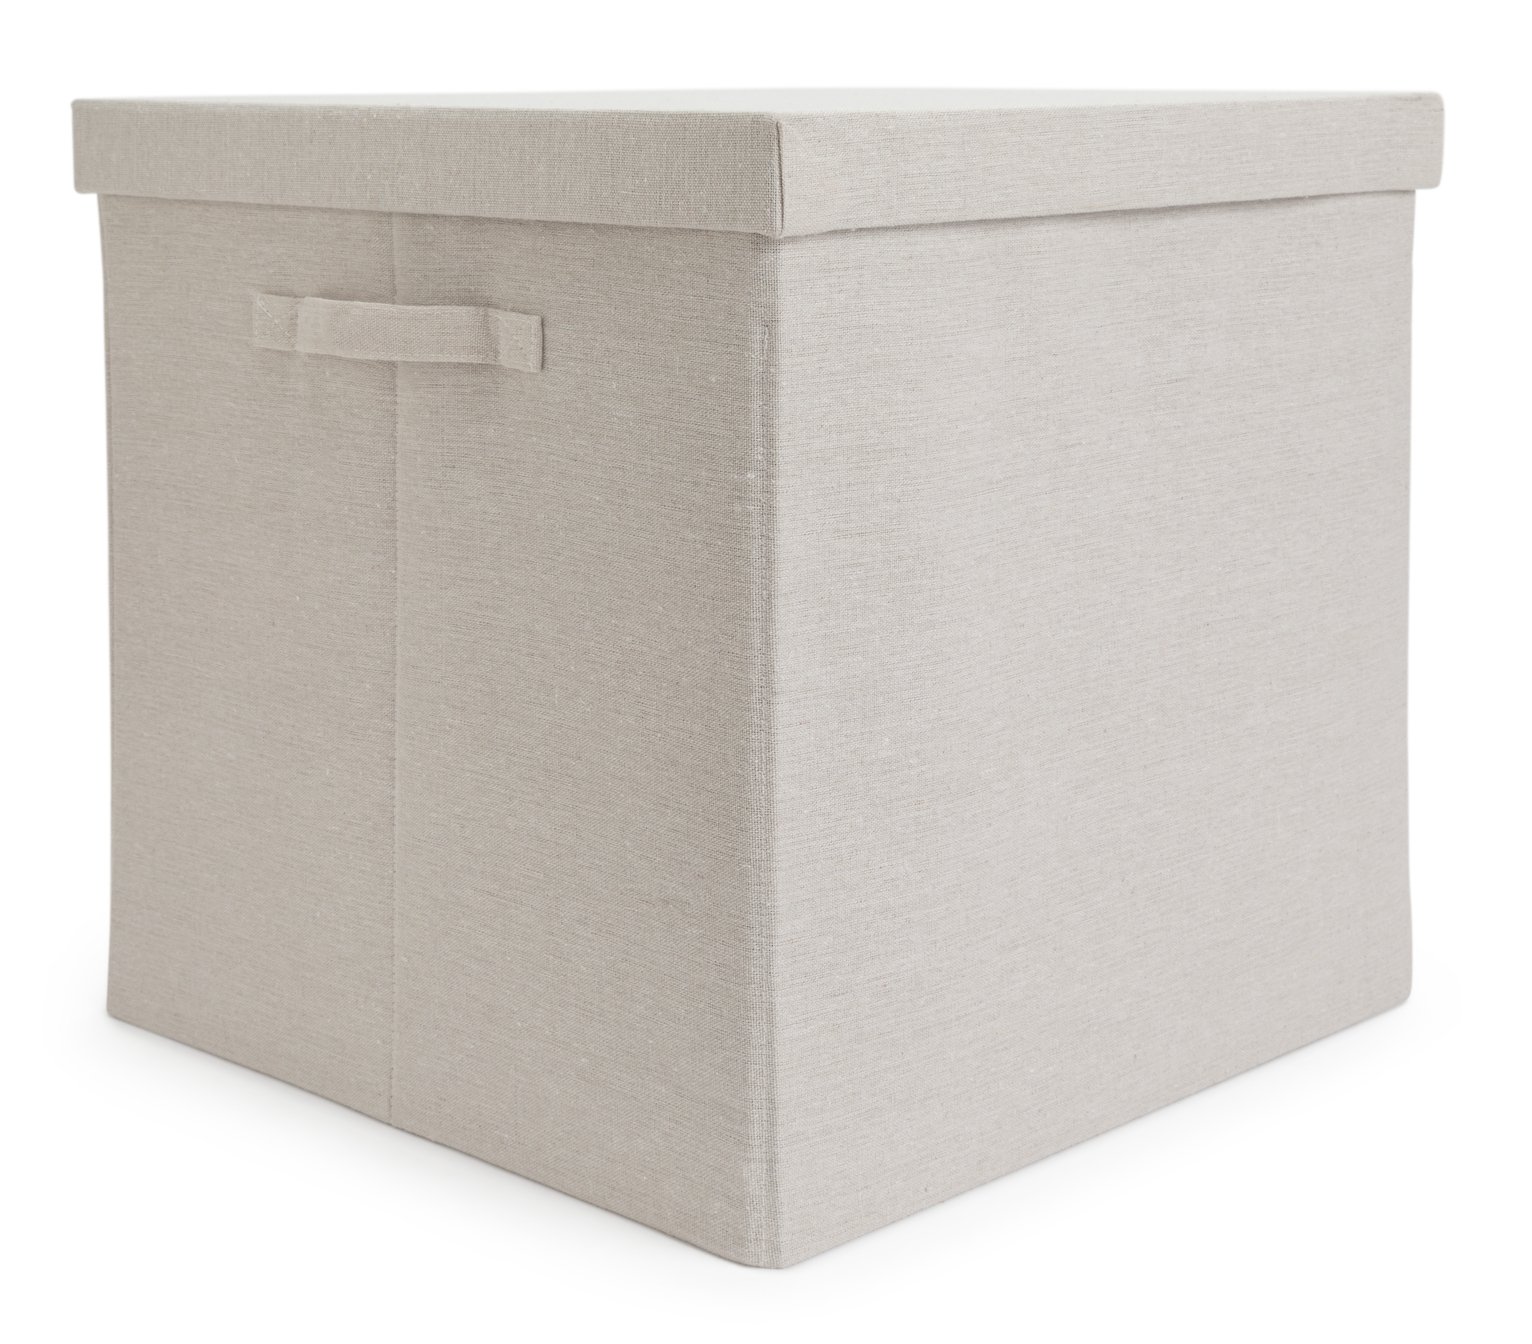 Habitat Fabric Storage Box - Beige